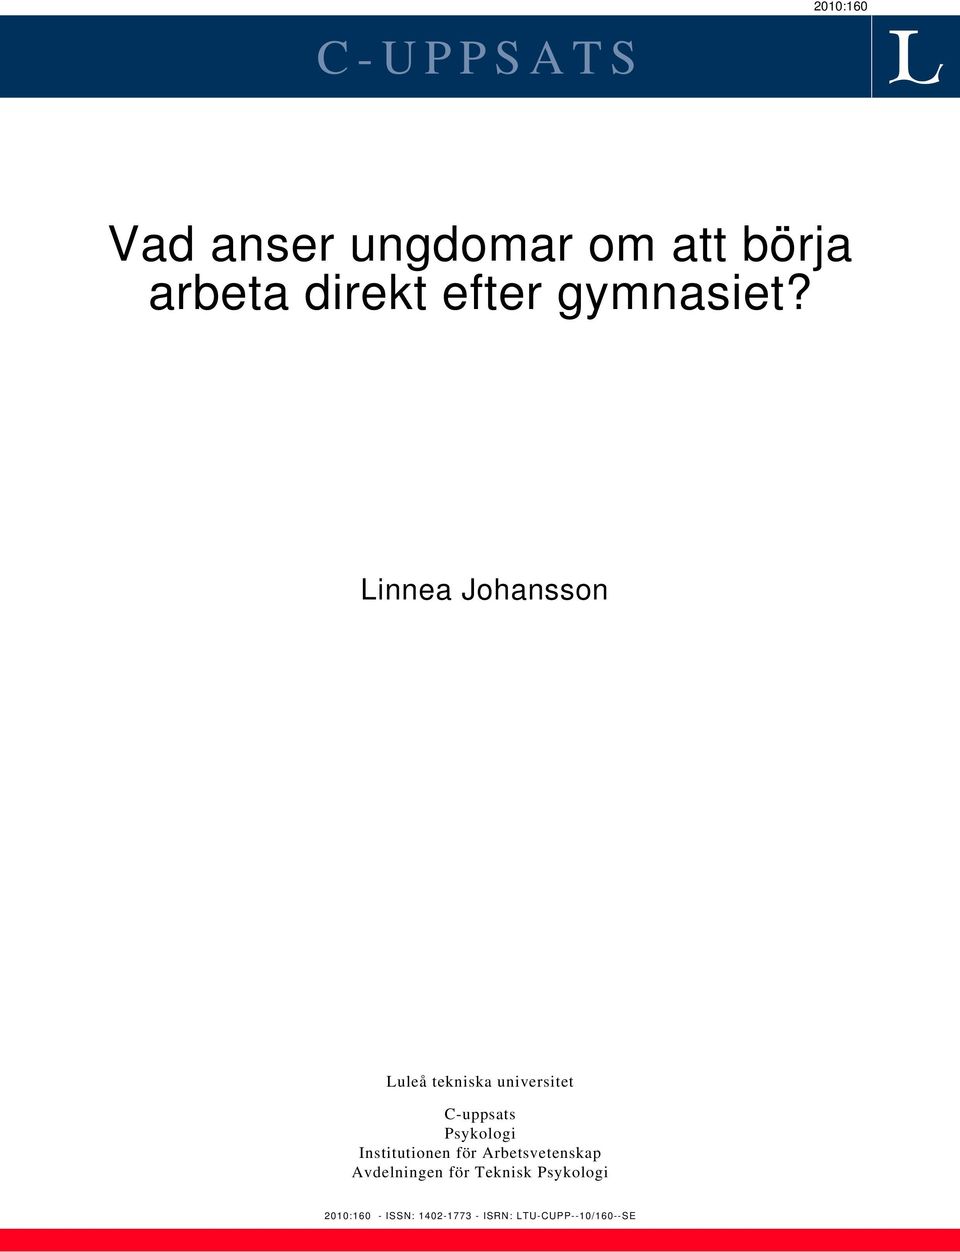 Linnea Johansson Luleå tekniska universitet C-uppsats Psykologi